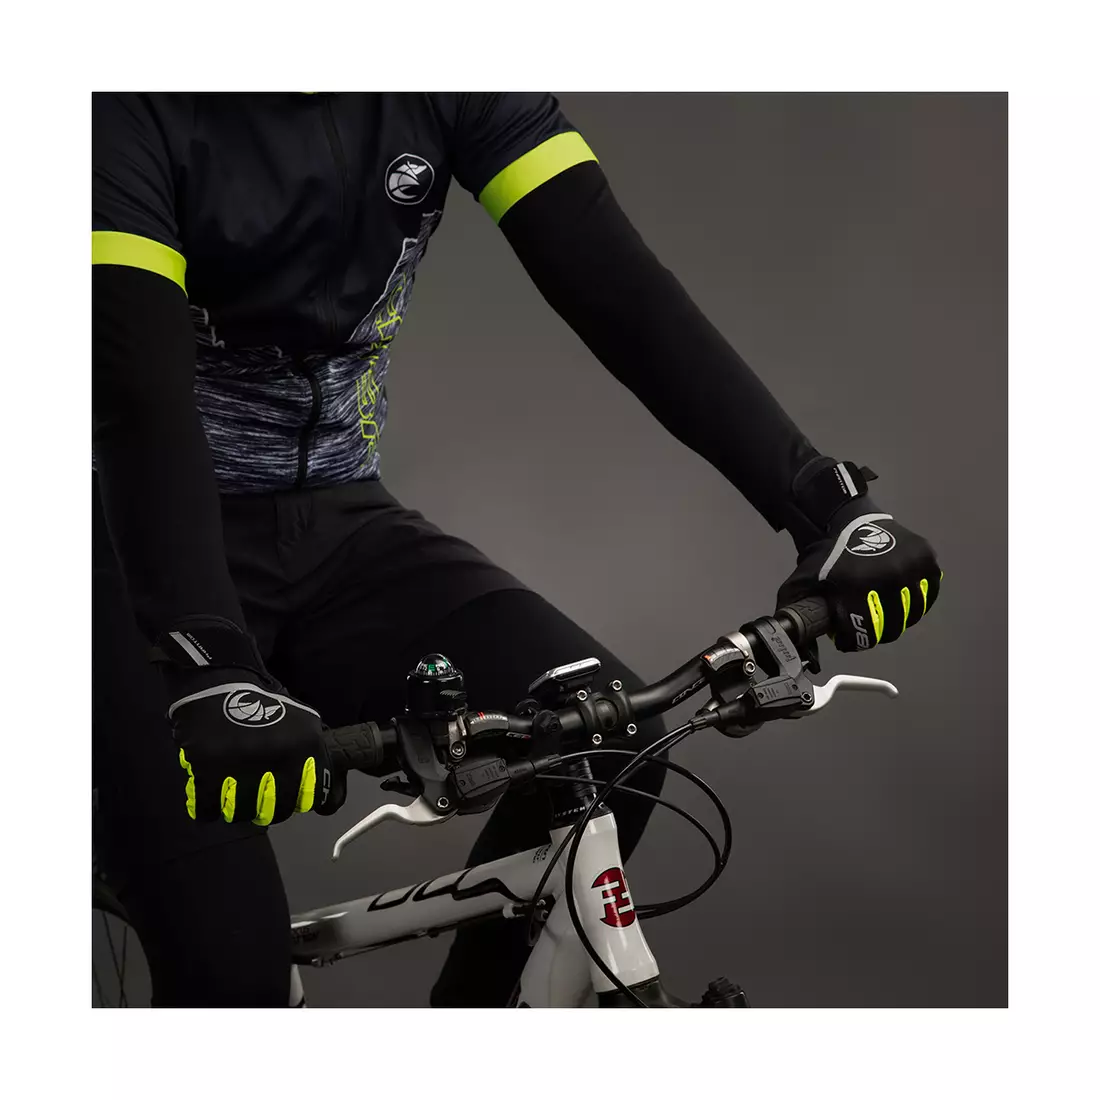 CHIBA PHANTOM zimné cyklistické rukavice black/fluo 3150520